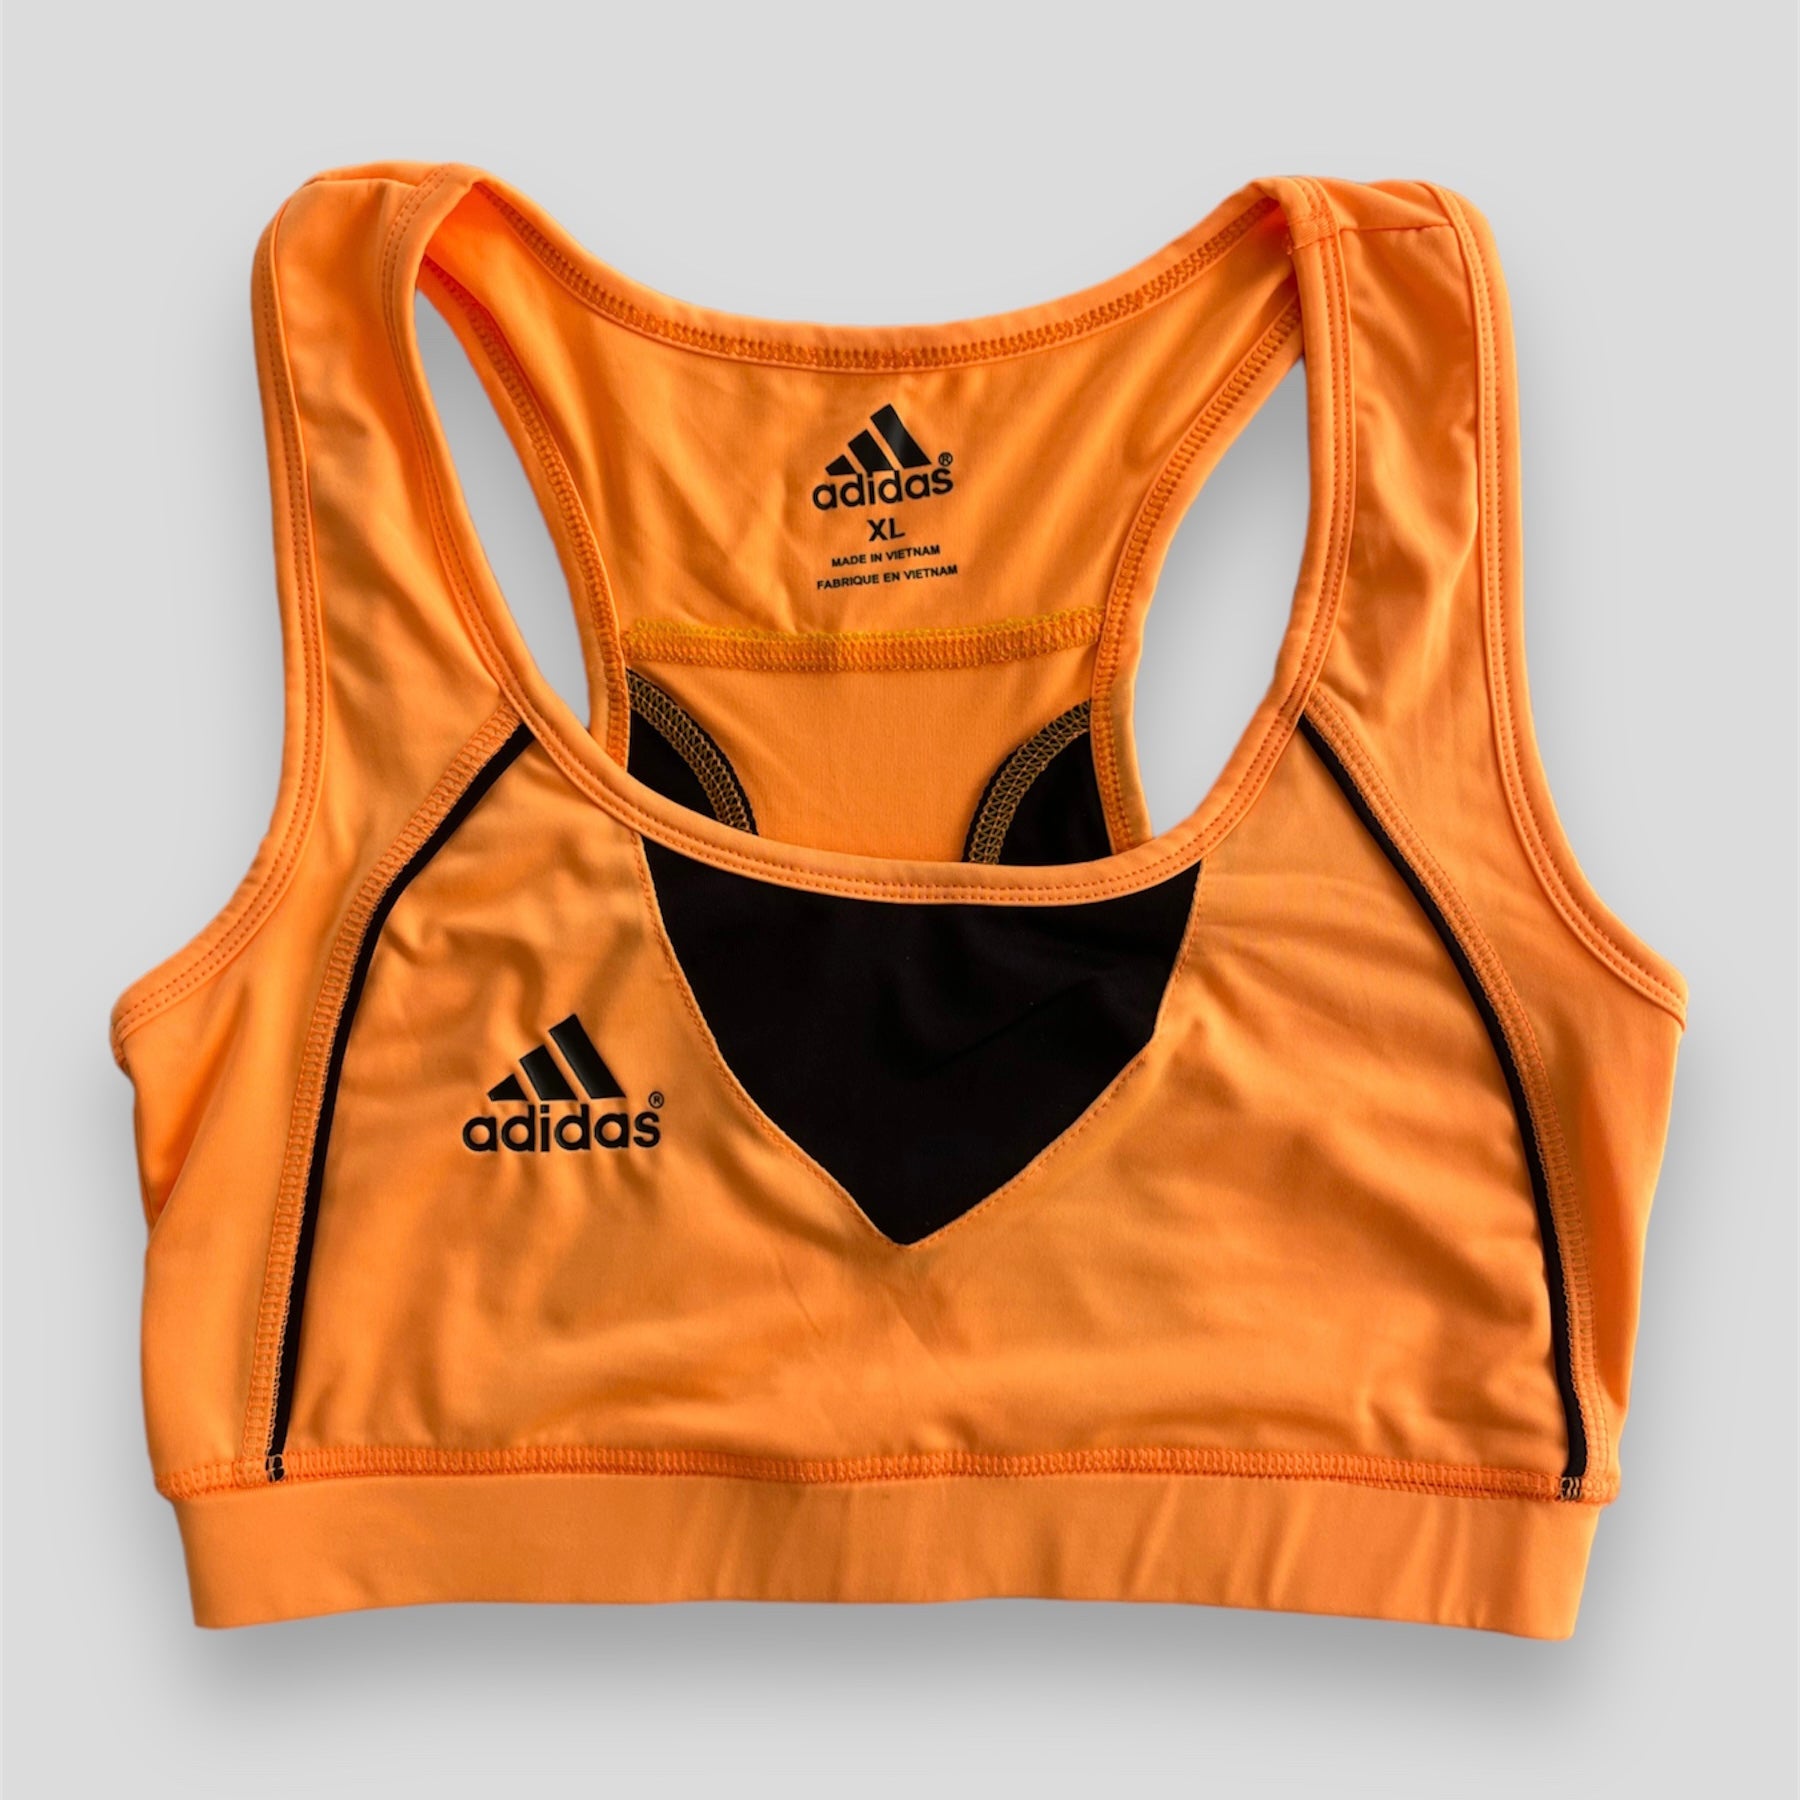 Adidas Neon Orange and Black Sports Bra - Small/Medium